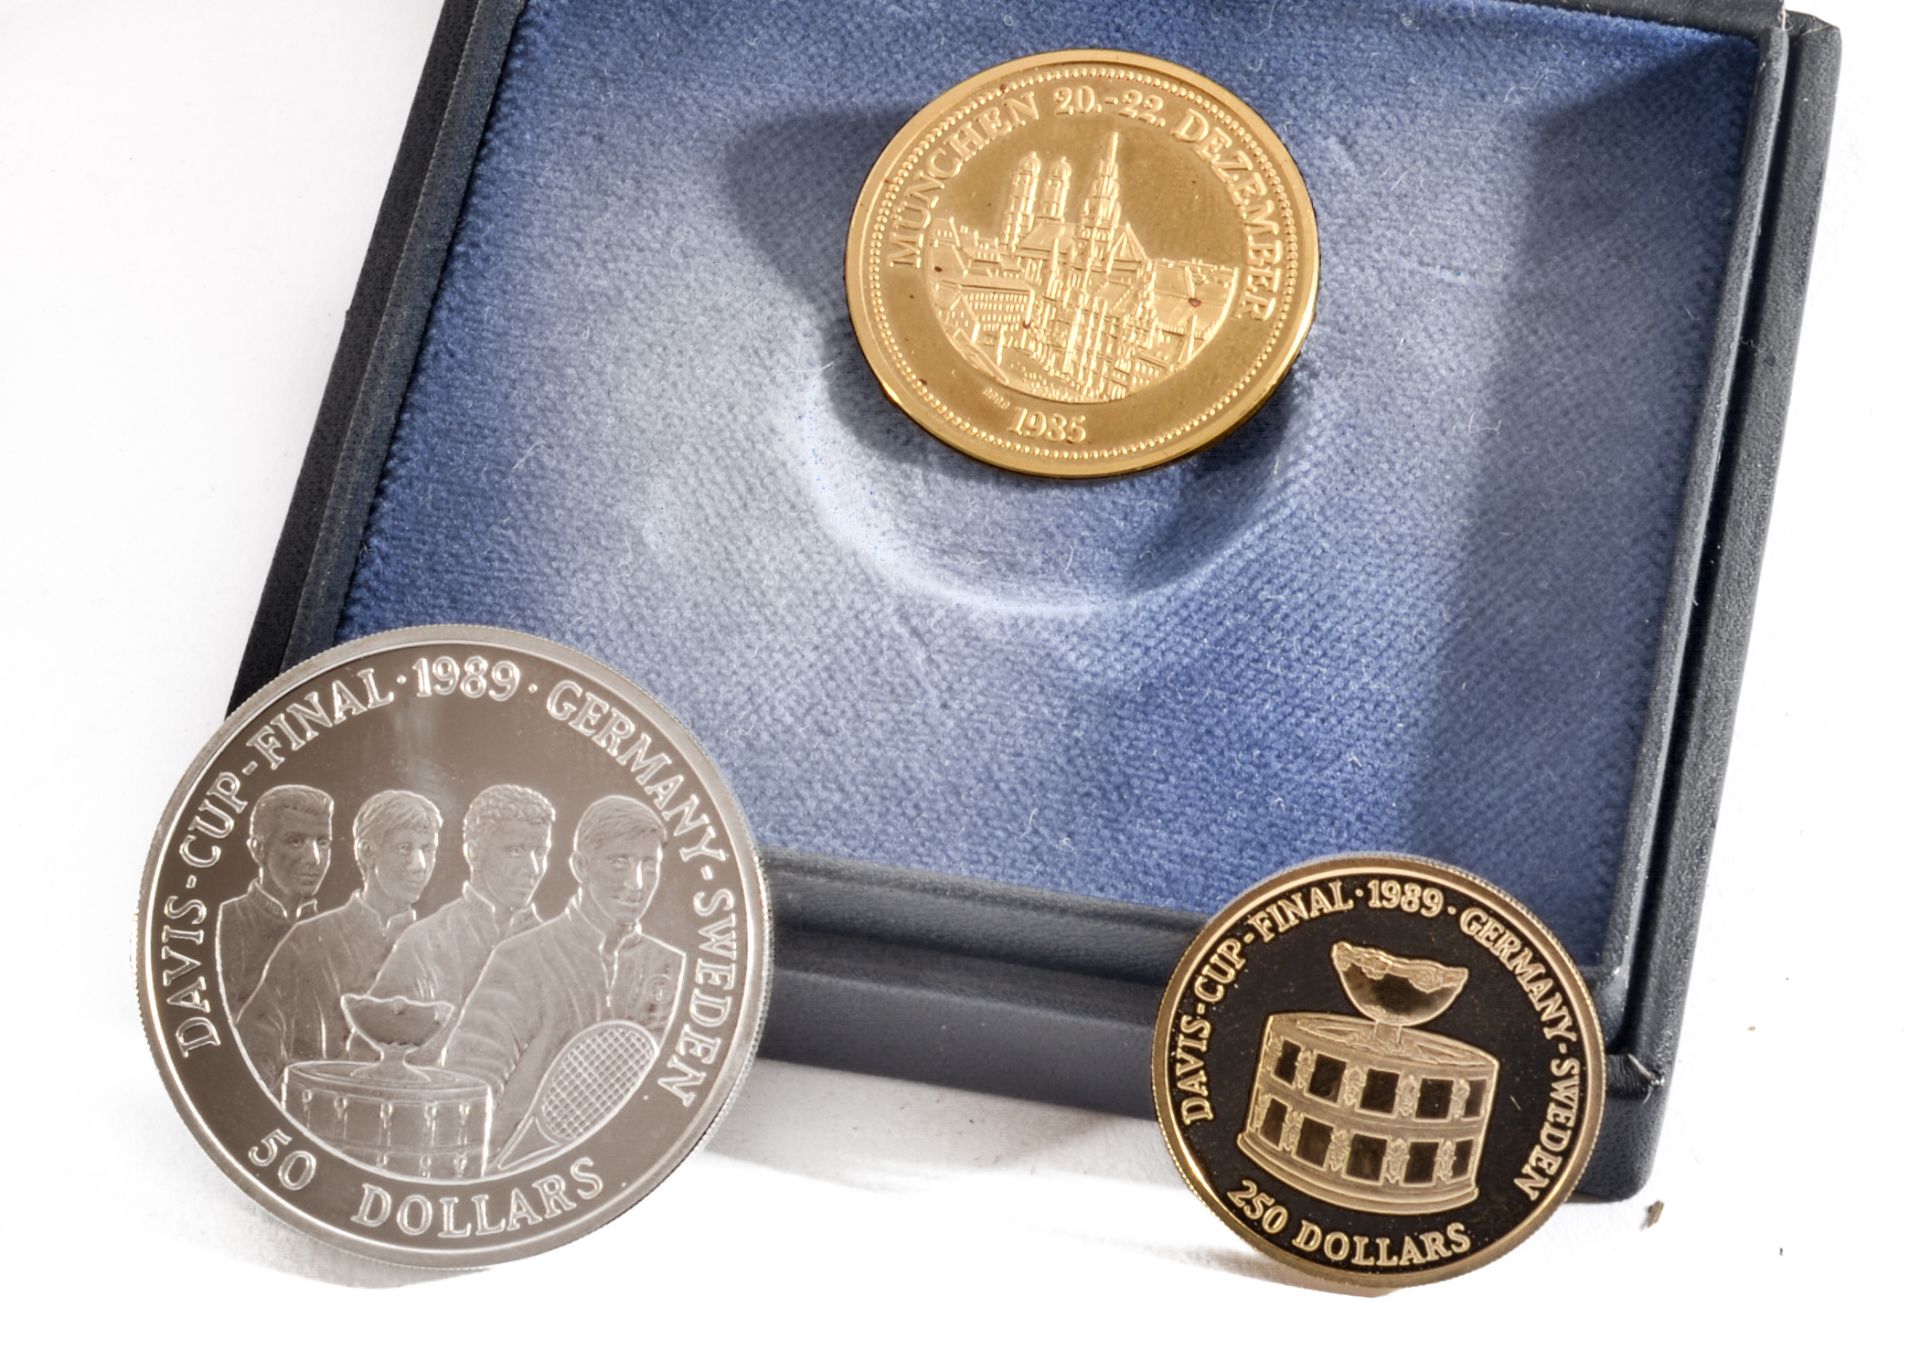 A DAVIS CUP Final 20-22/12/1985 30mm diameter Commemorative Gold Coin (Assayed 999.9, 14 grams) - Image 2 of 3